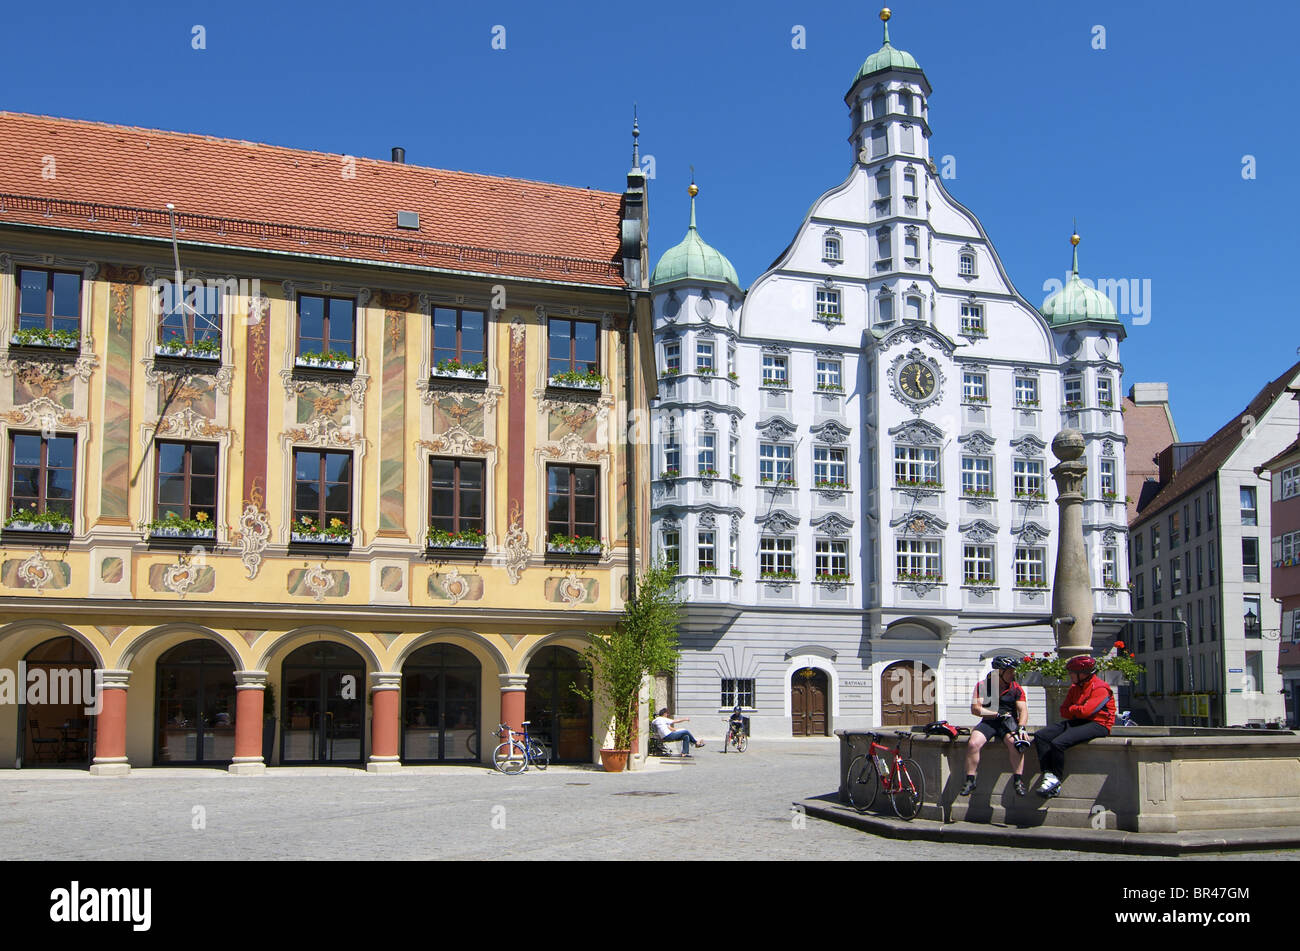 Steuerhaus and town hall, Memmingen, Bavaria, Germany, Europe Stock Photo